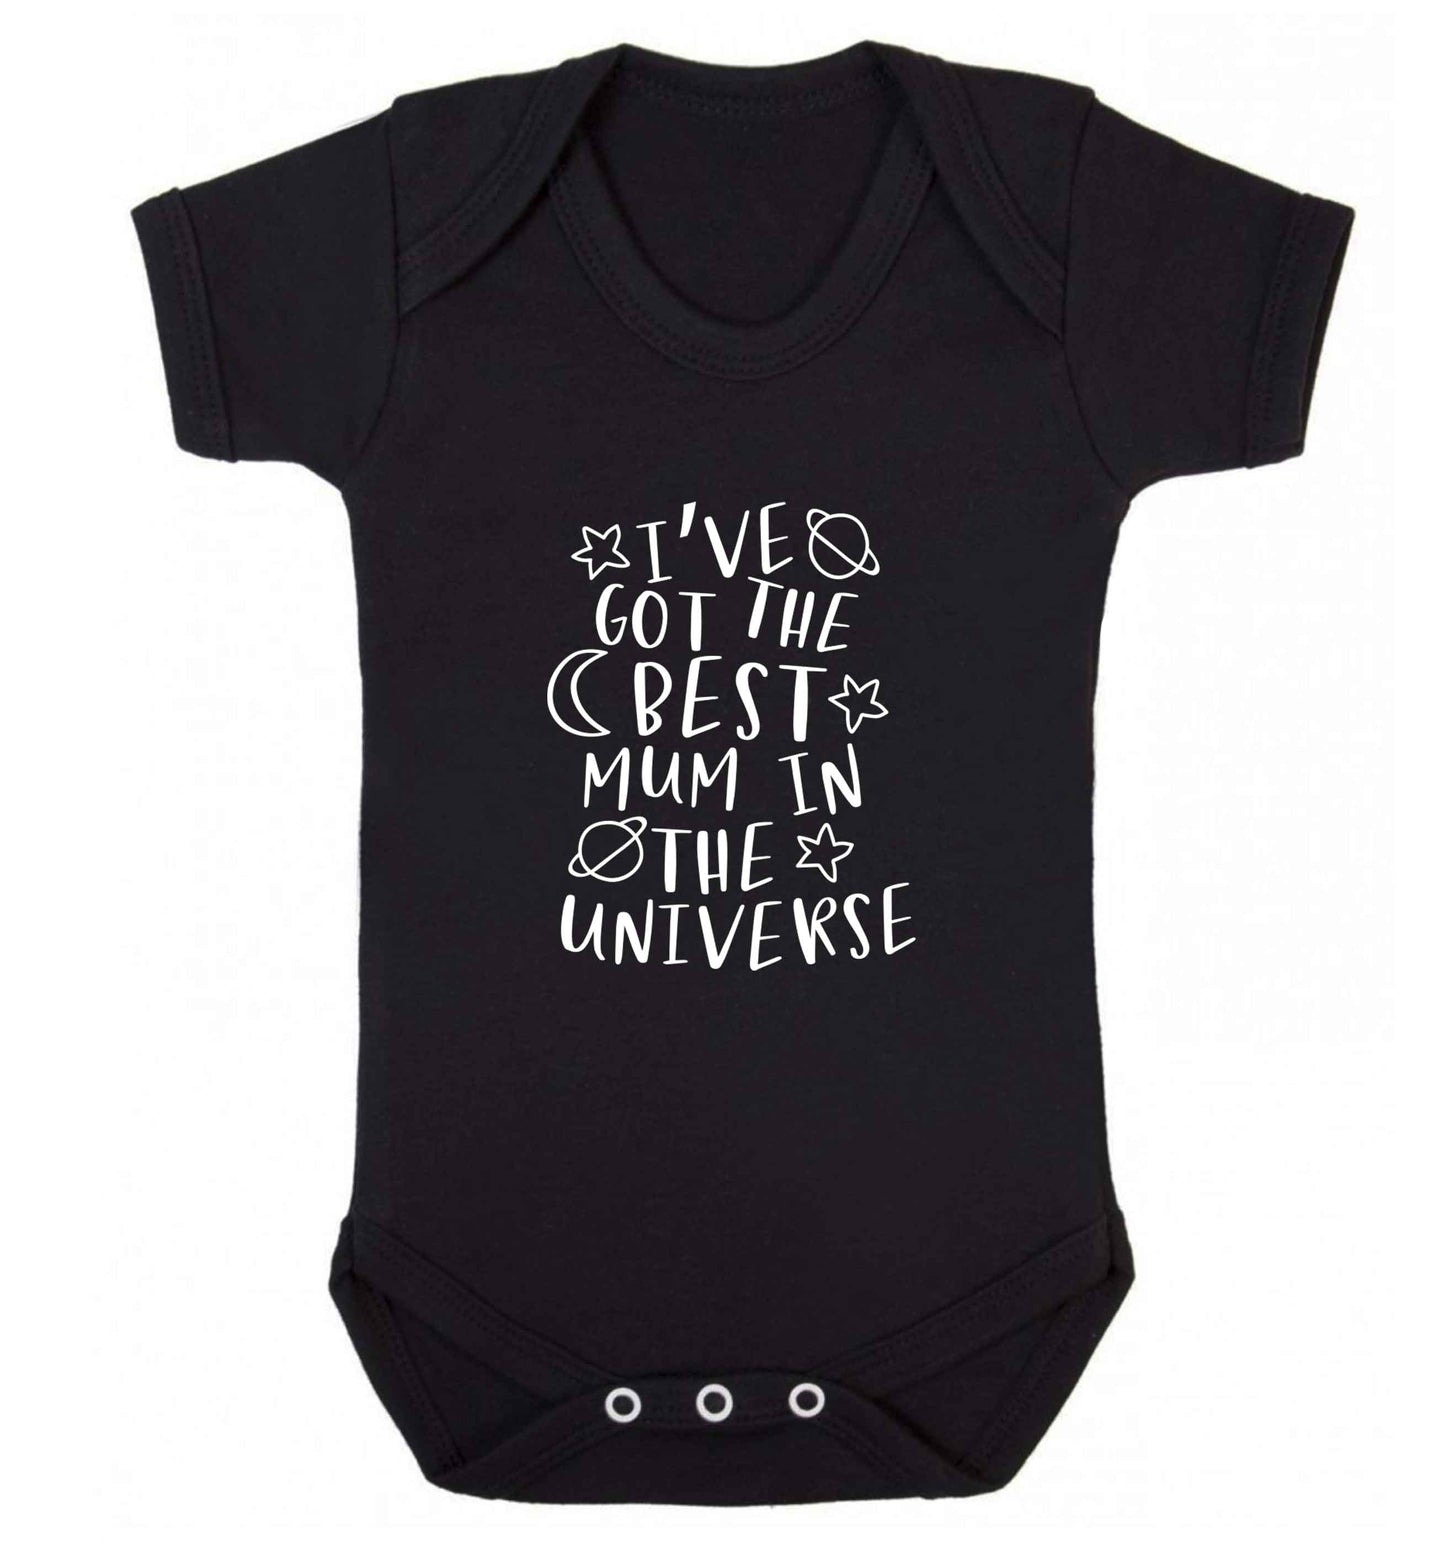 I've got the best mum in the universe baby vest black 18-24 months